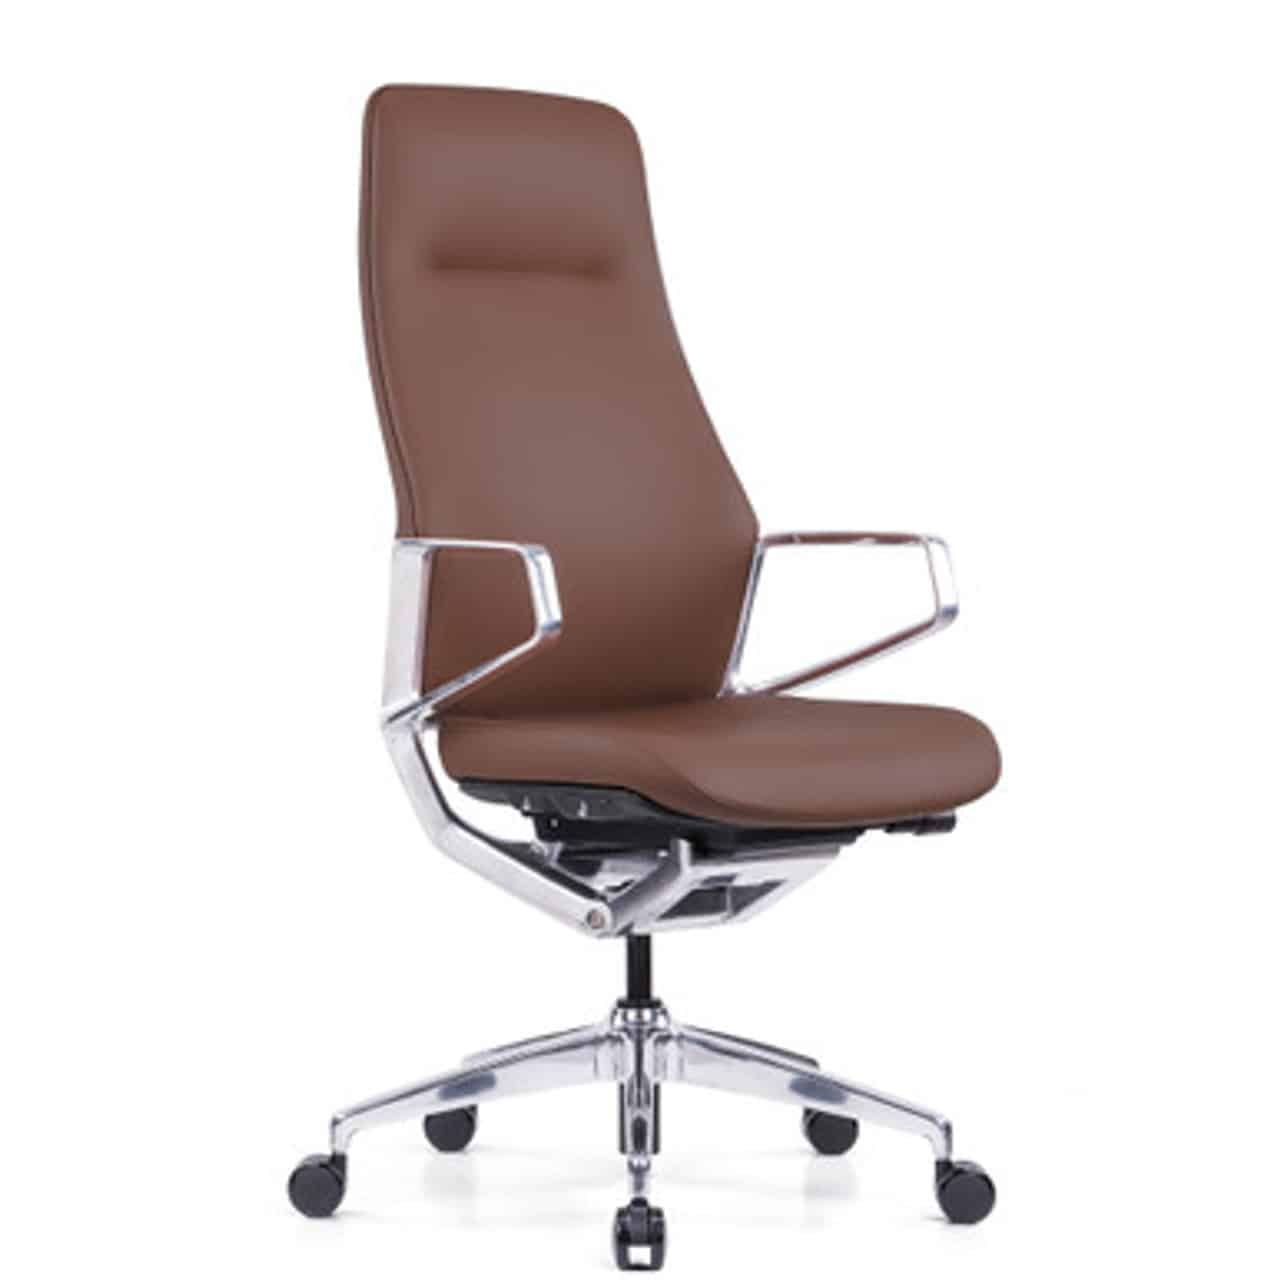 brown veneto office chair high back modern